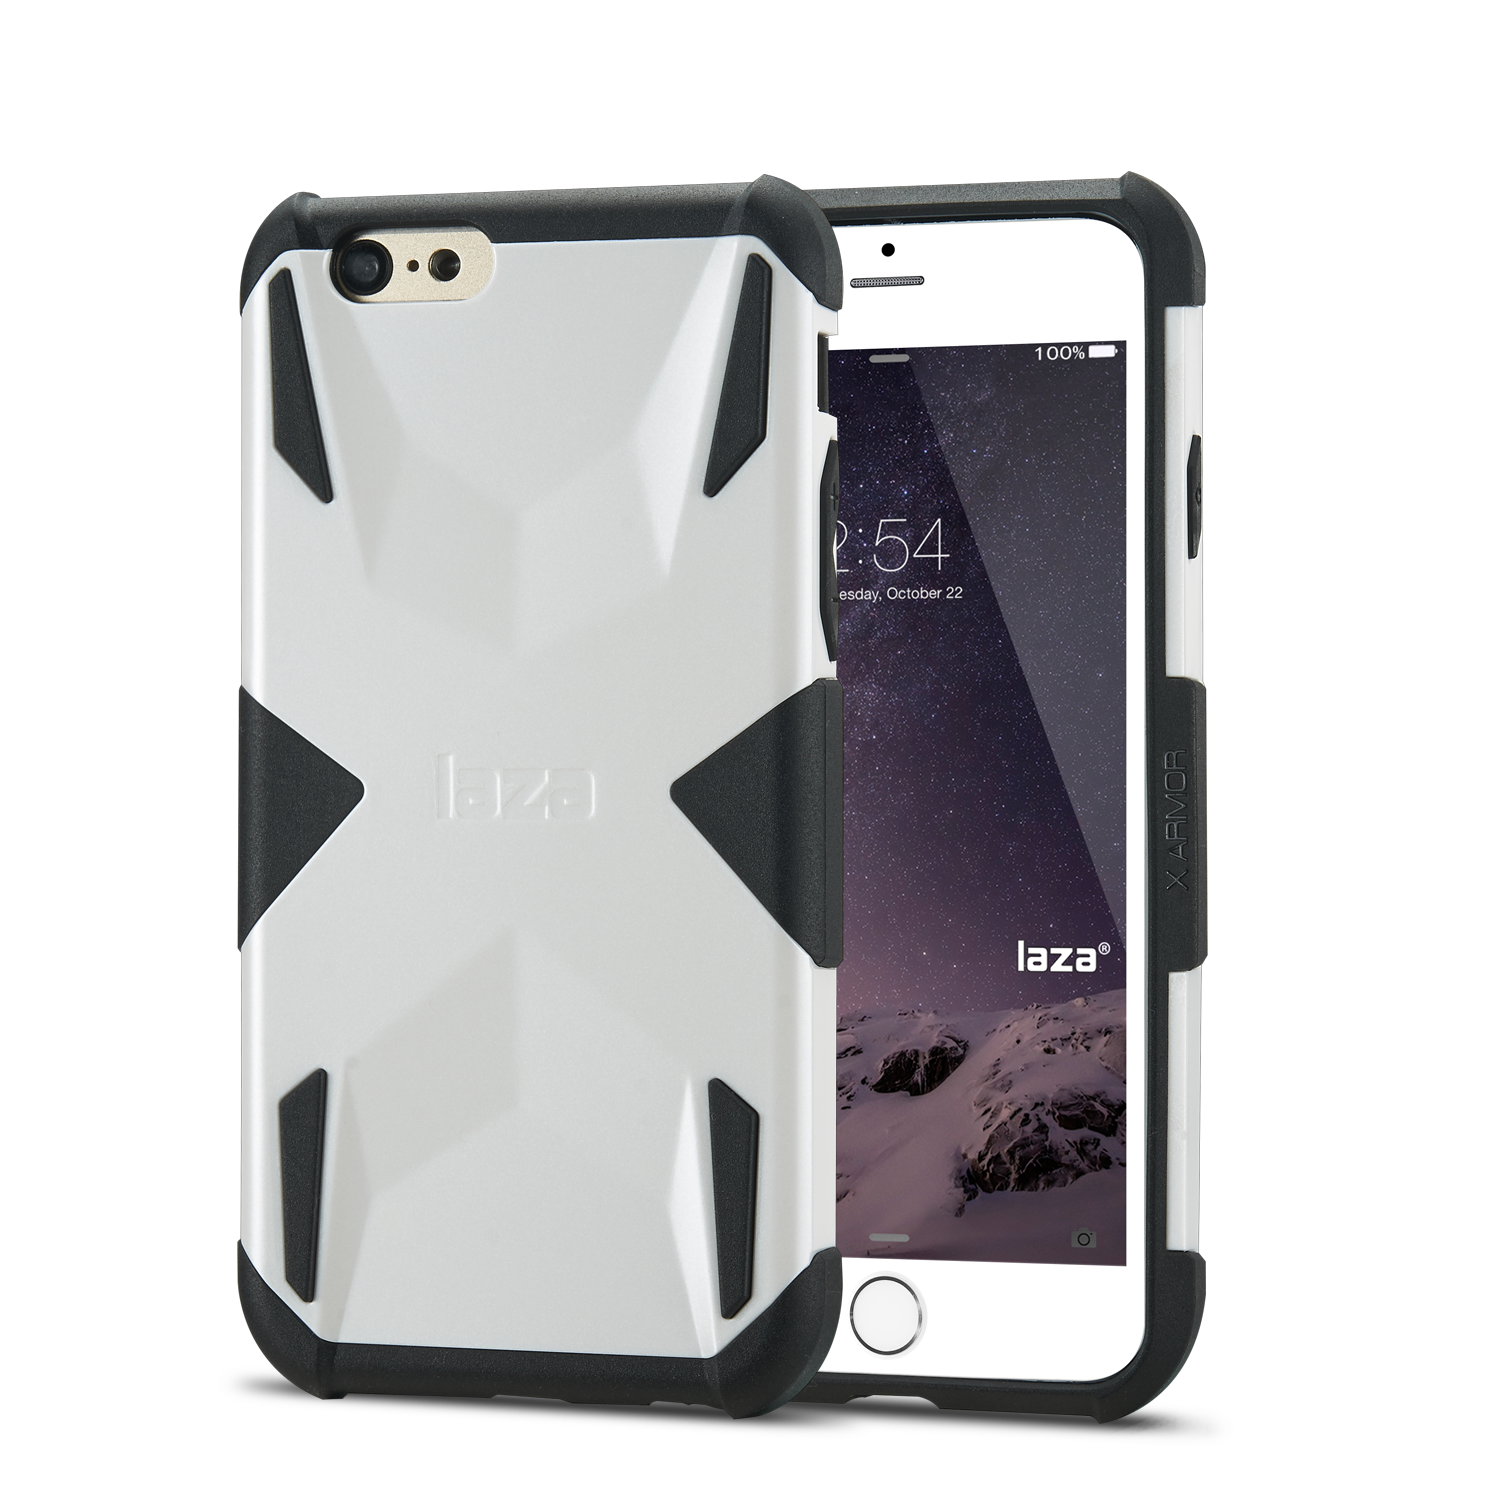 Laza X Armor Case for iPhone 6/6 Plus